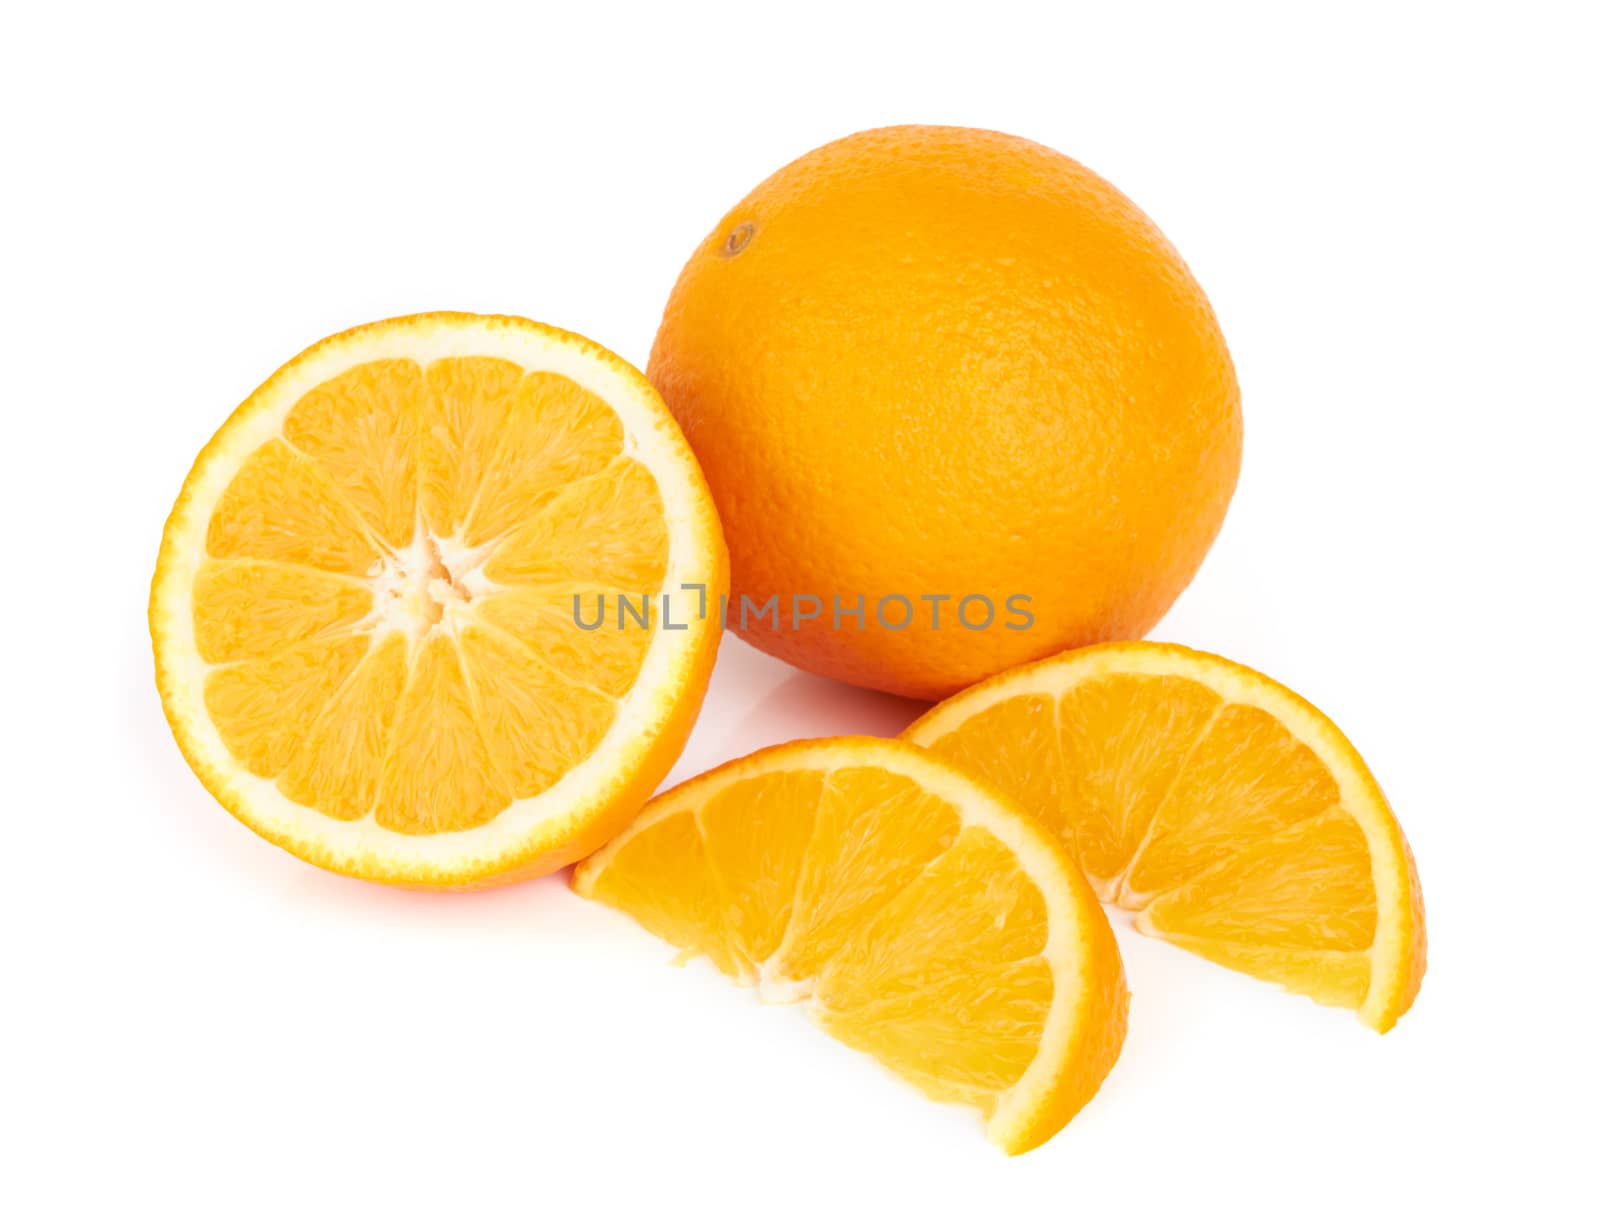 Orange fruit on white by pioneer111